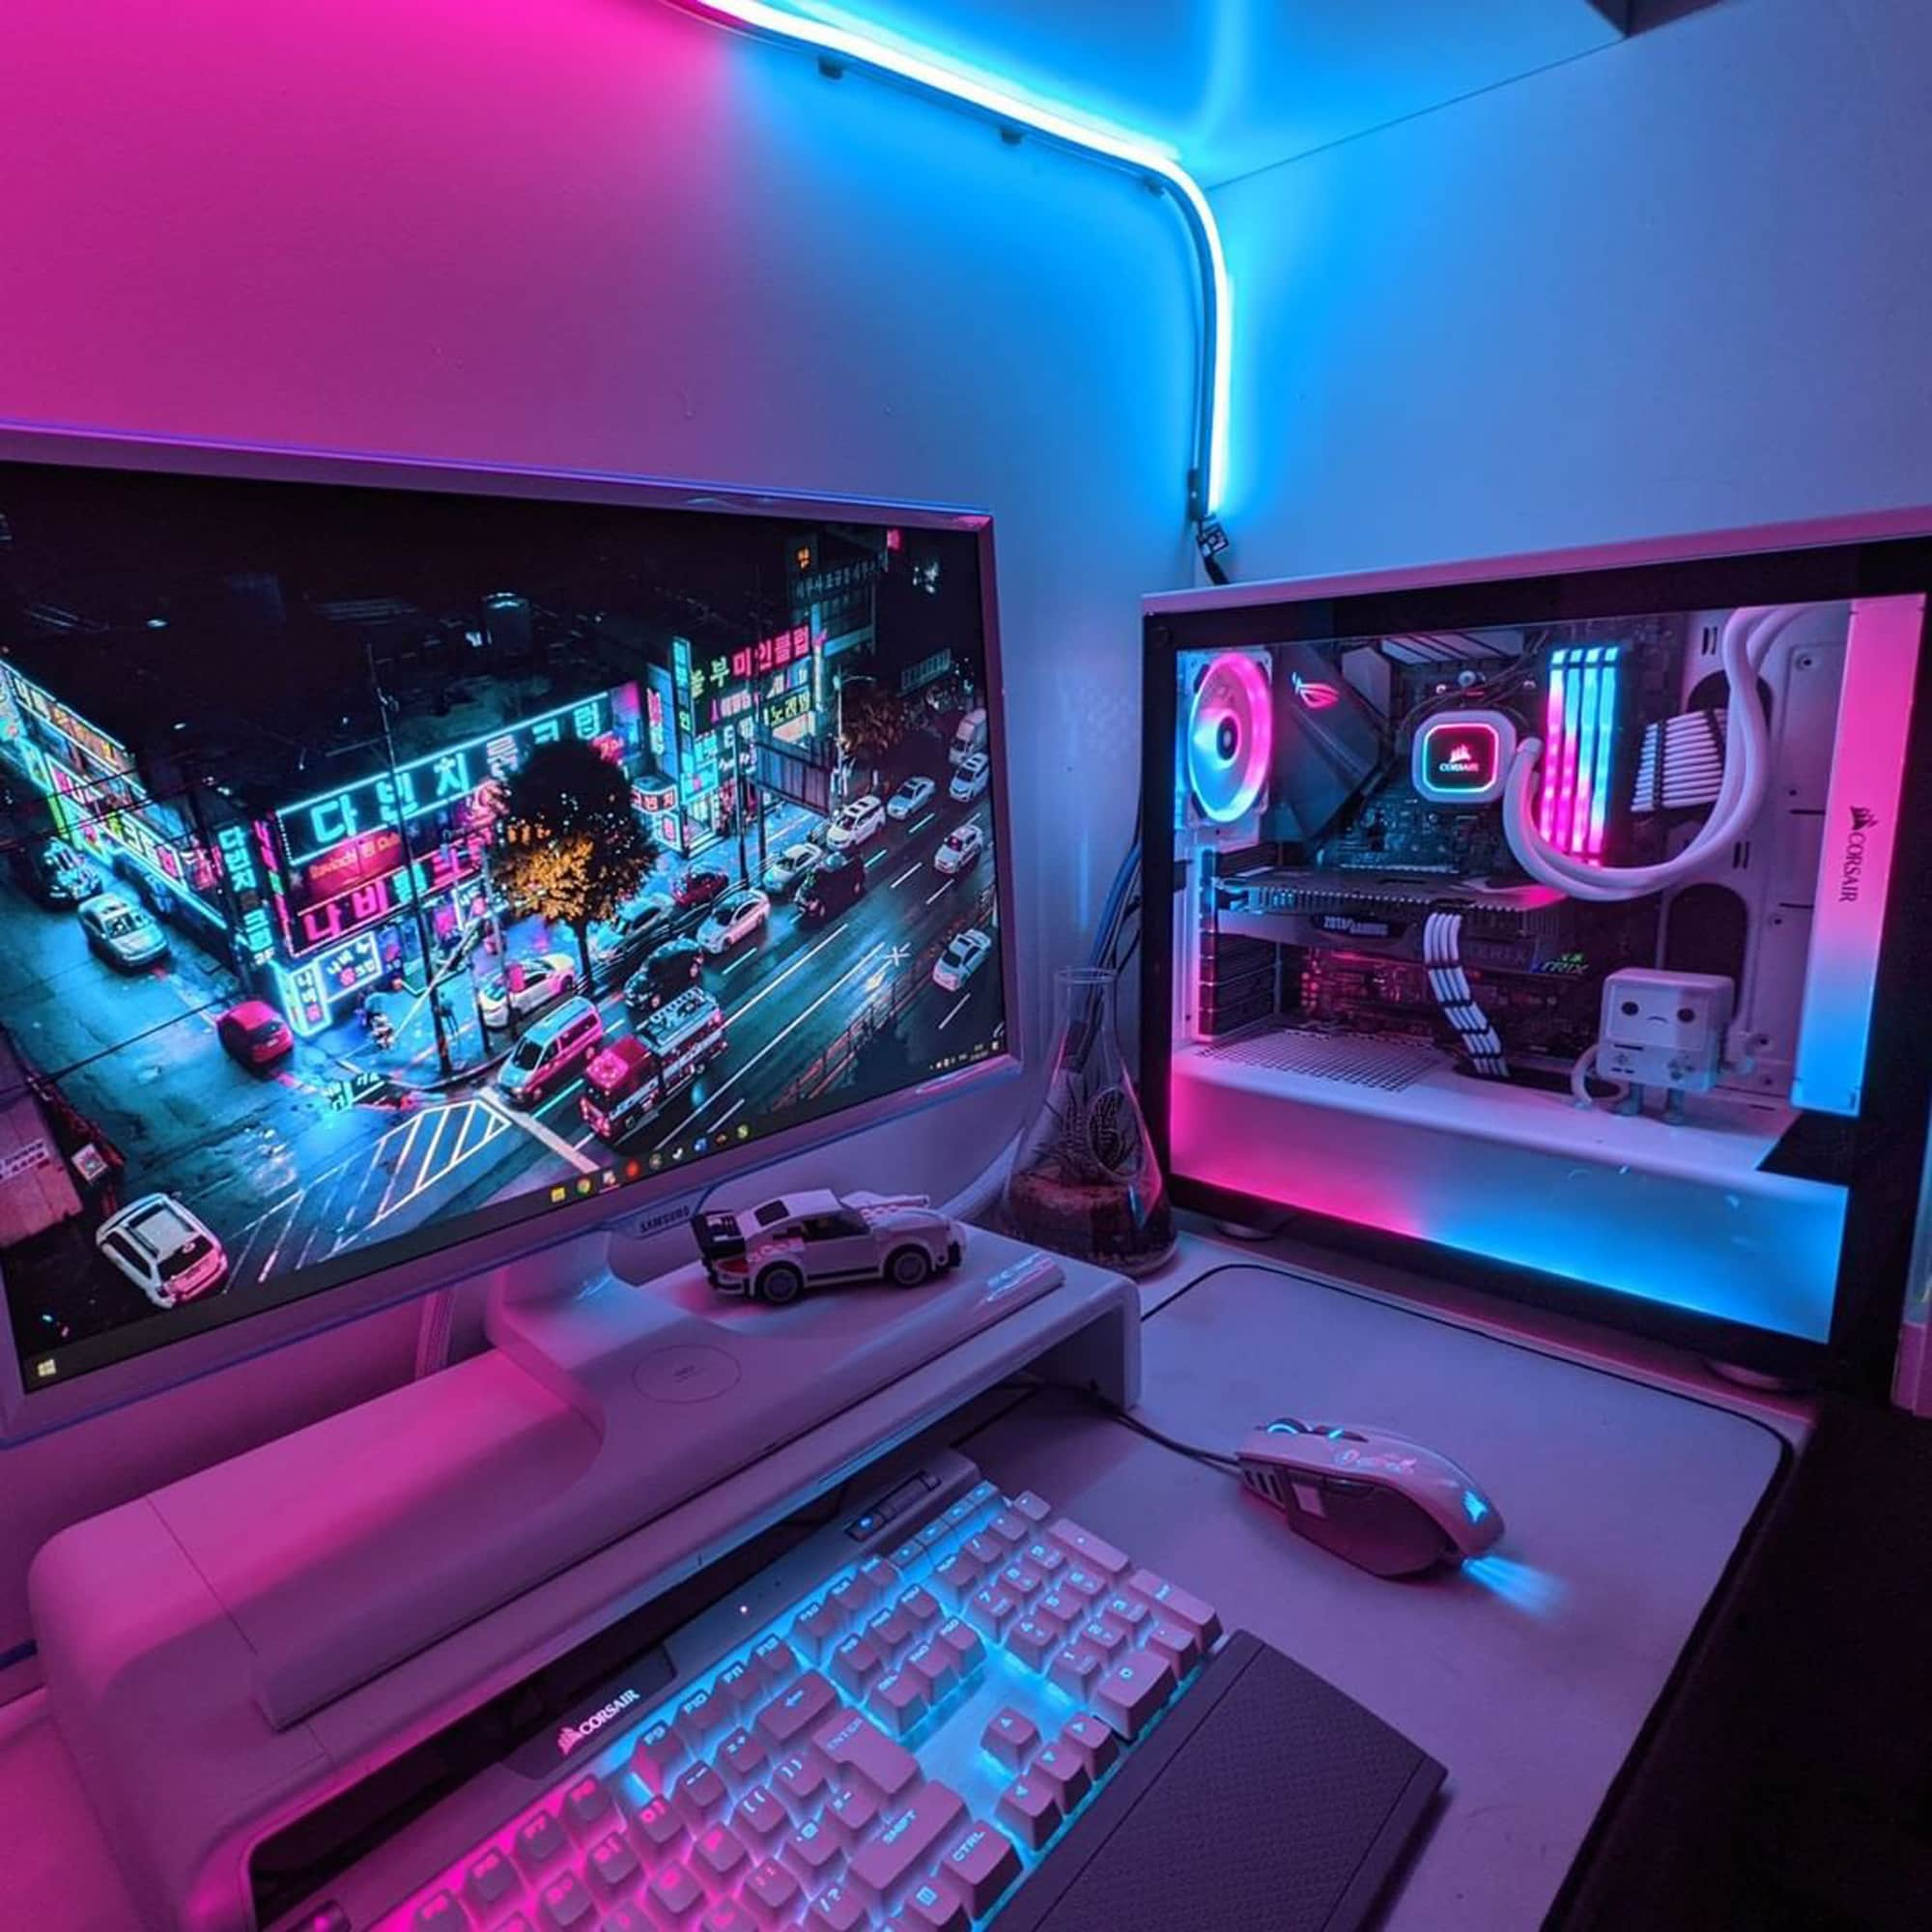 Why do gamers like RGB lights?